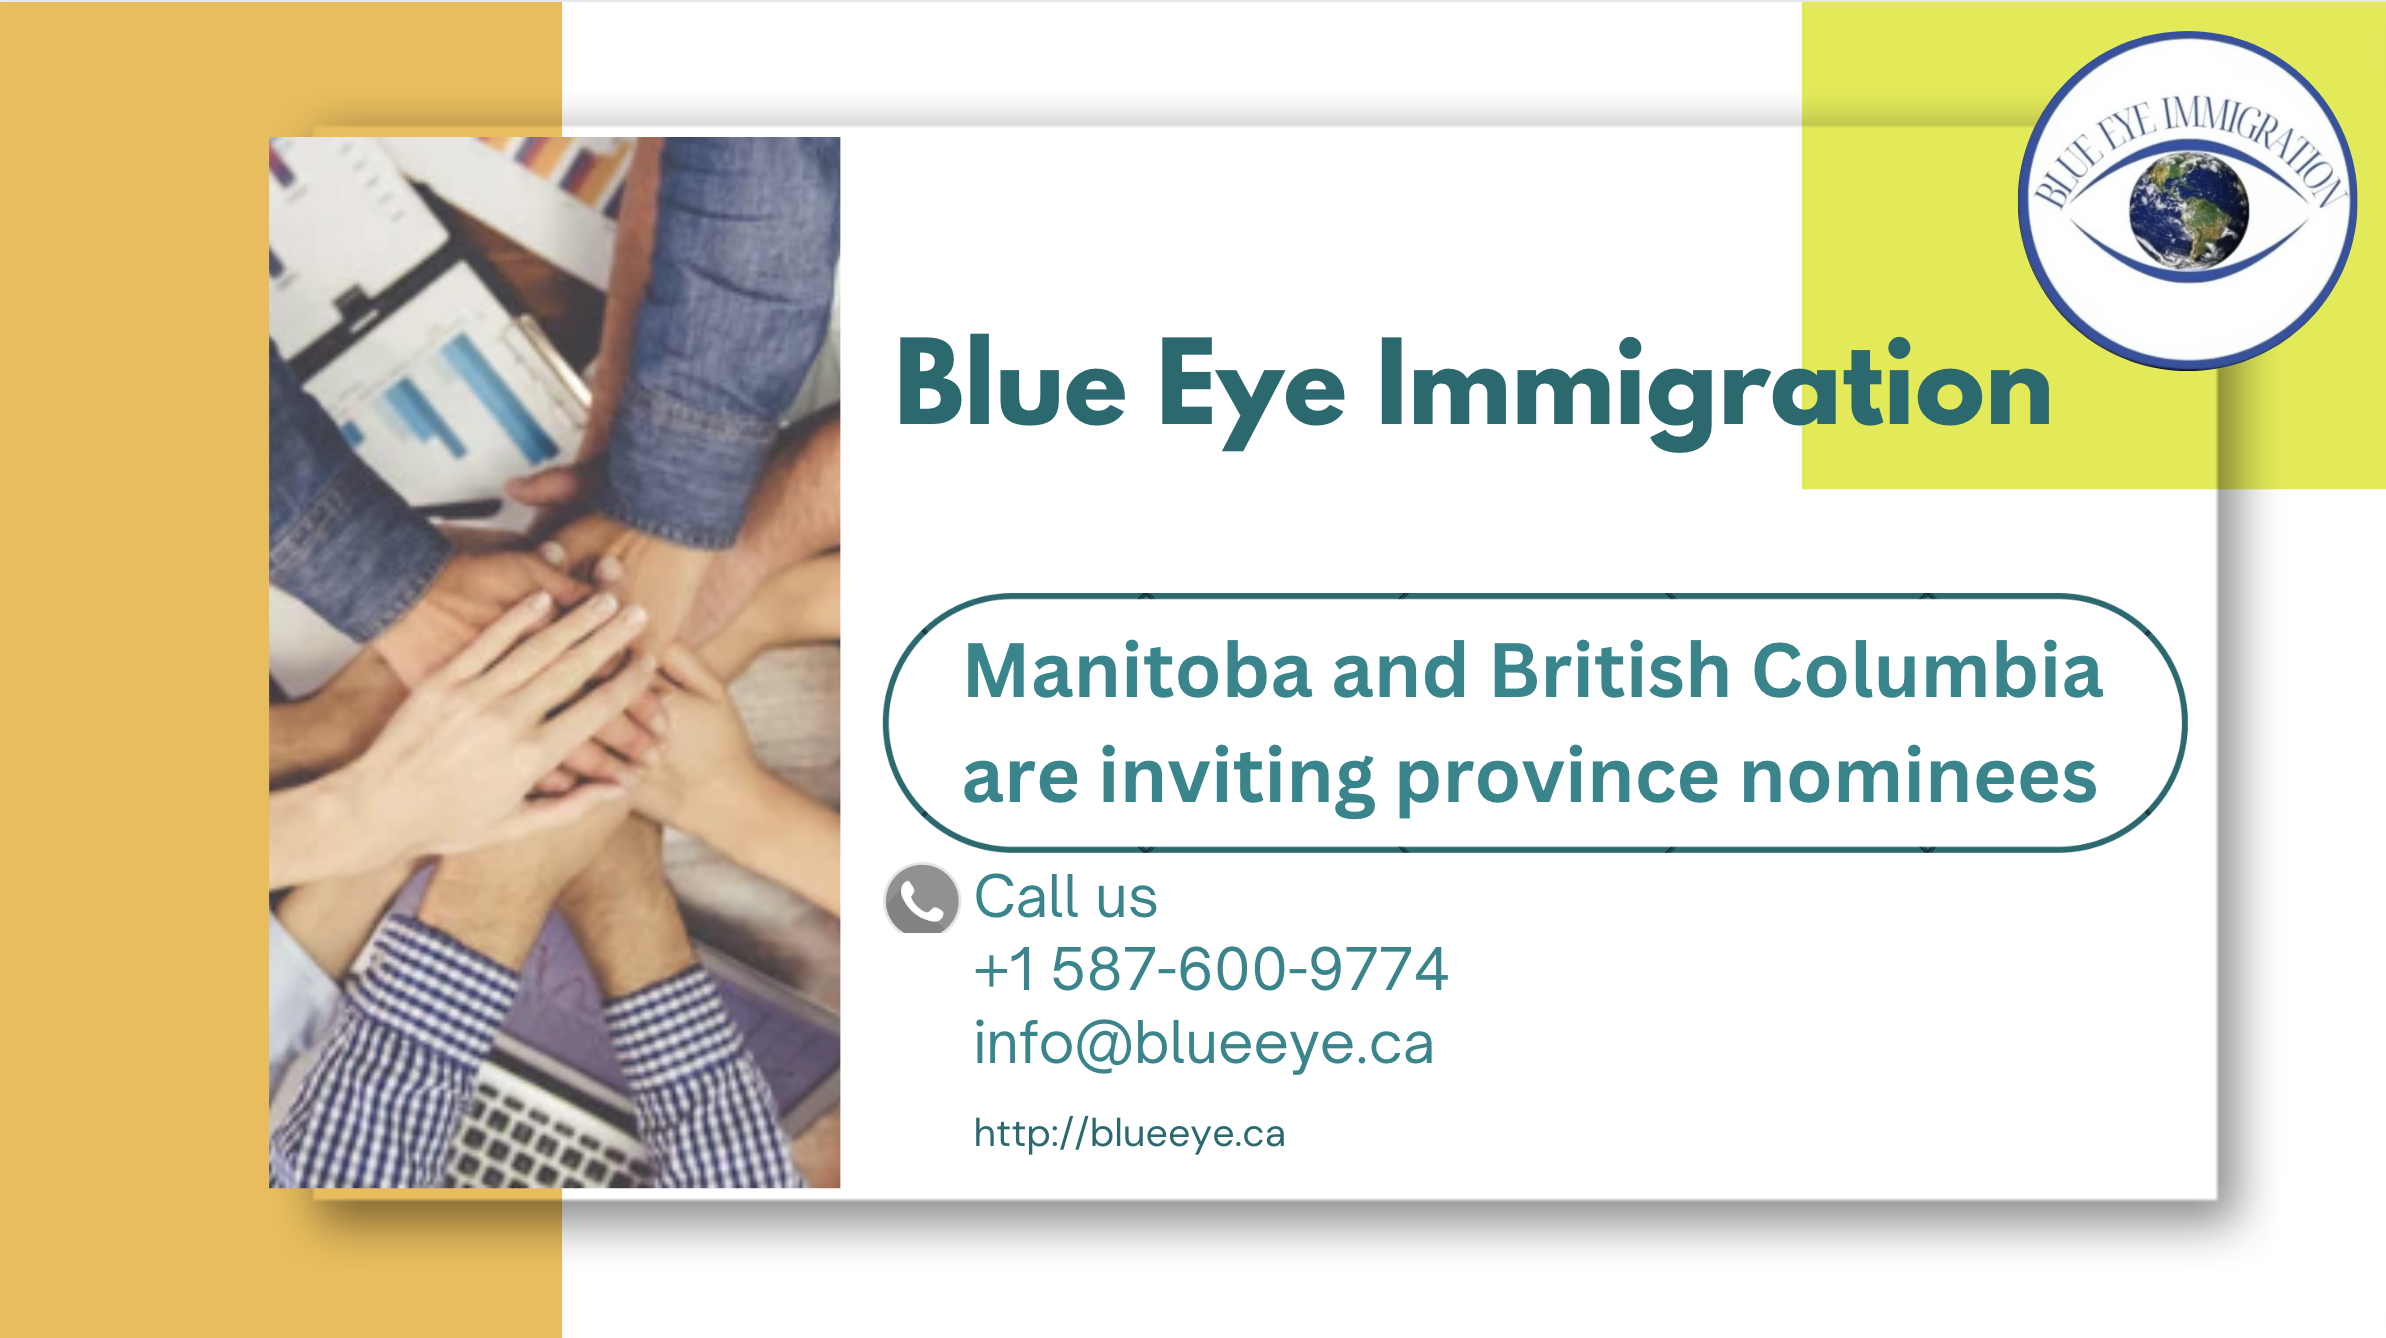 Manitoba and British Columbia are inviting province nominees